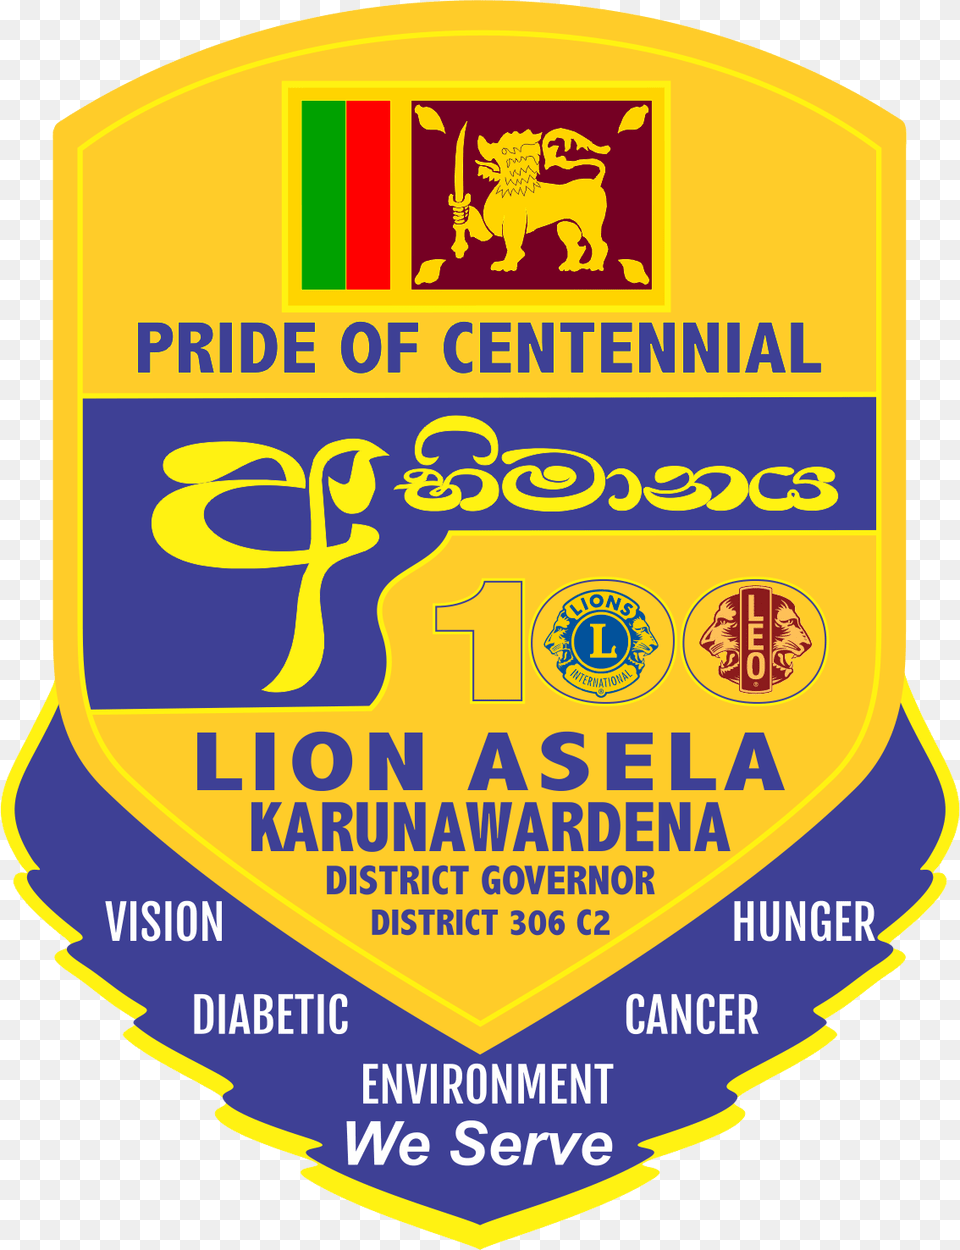 Lions Clubs International Leo Clubs Logo Nawala Font Leo Club Sri Lanka Logo, Badge, Symbol, Advertisement, Poster Png Image